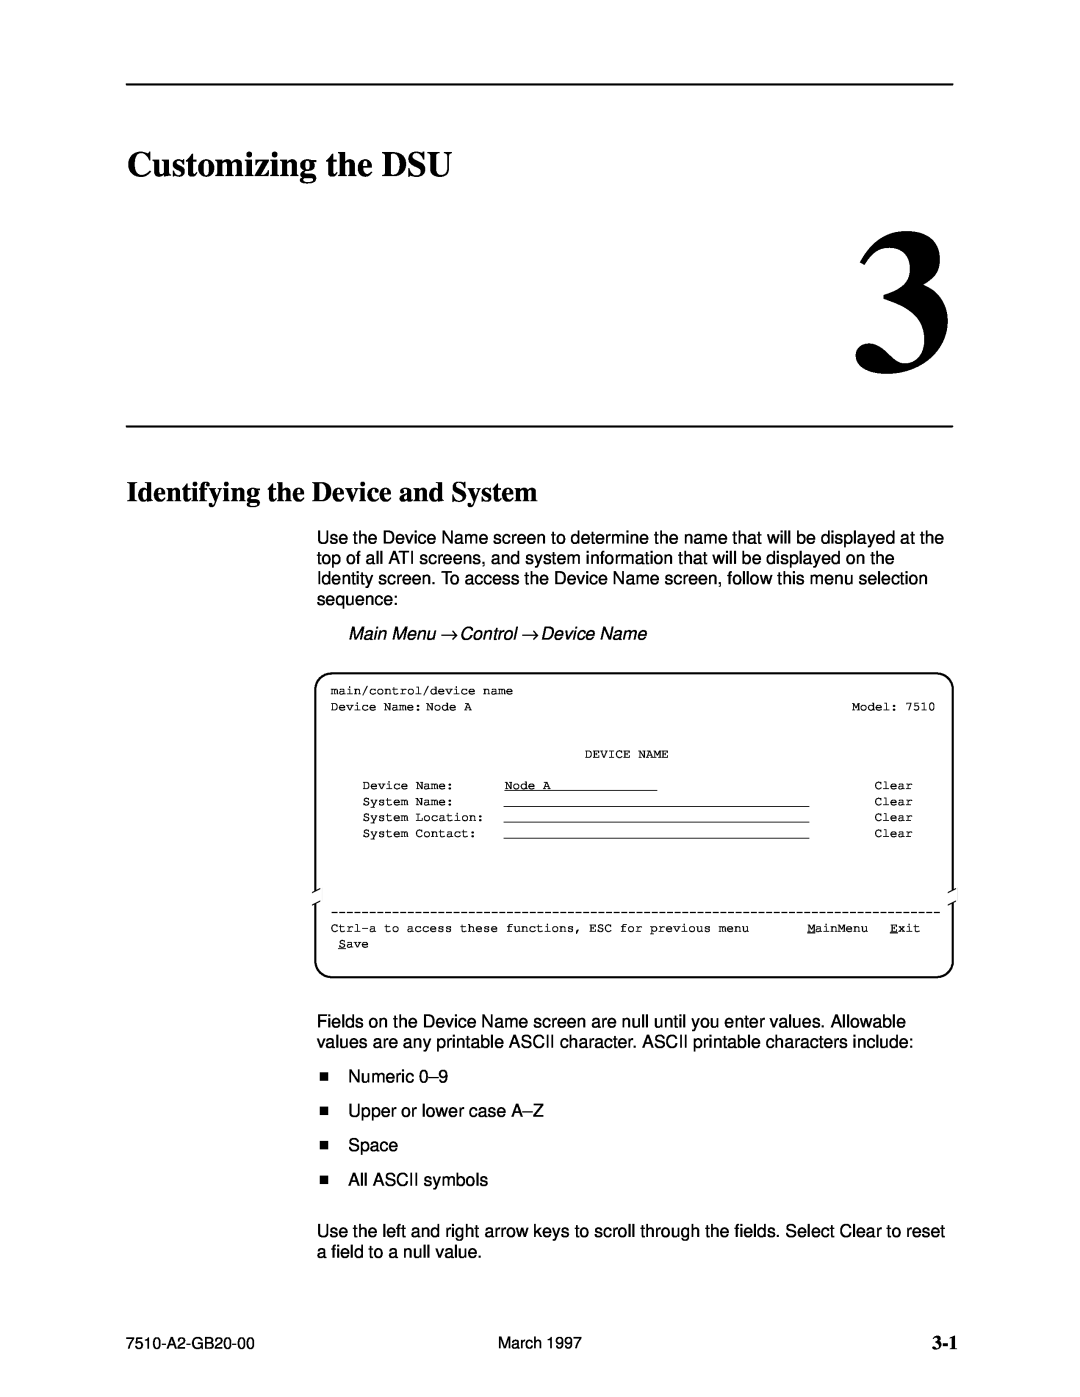 Paradyne 727 manual Customizing the DSU, Identifying the Device and System 